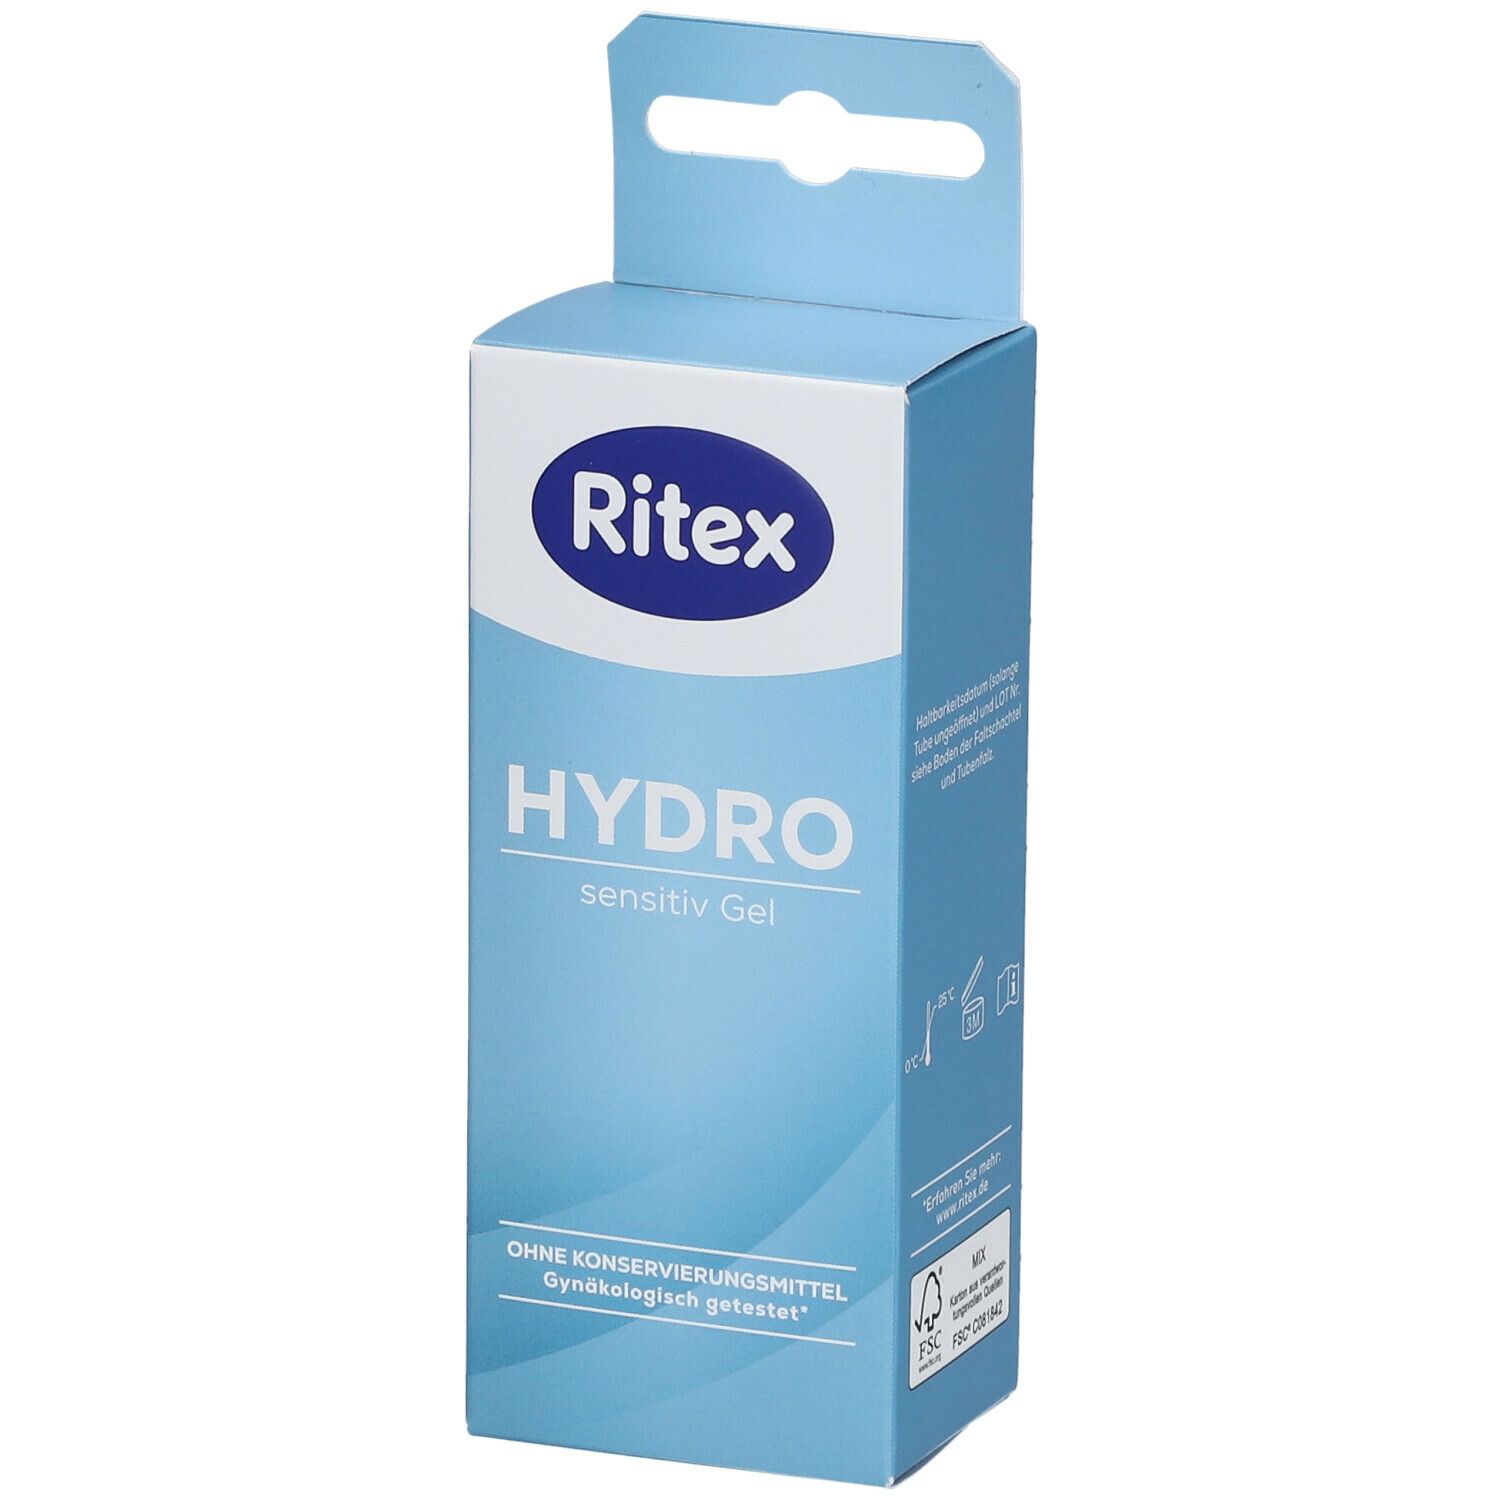 Ritex HYDRO Sensitiv Gel